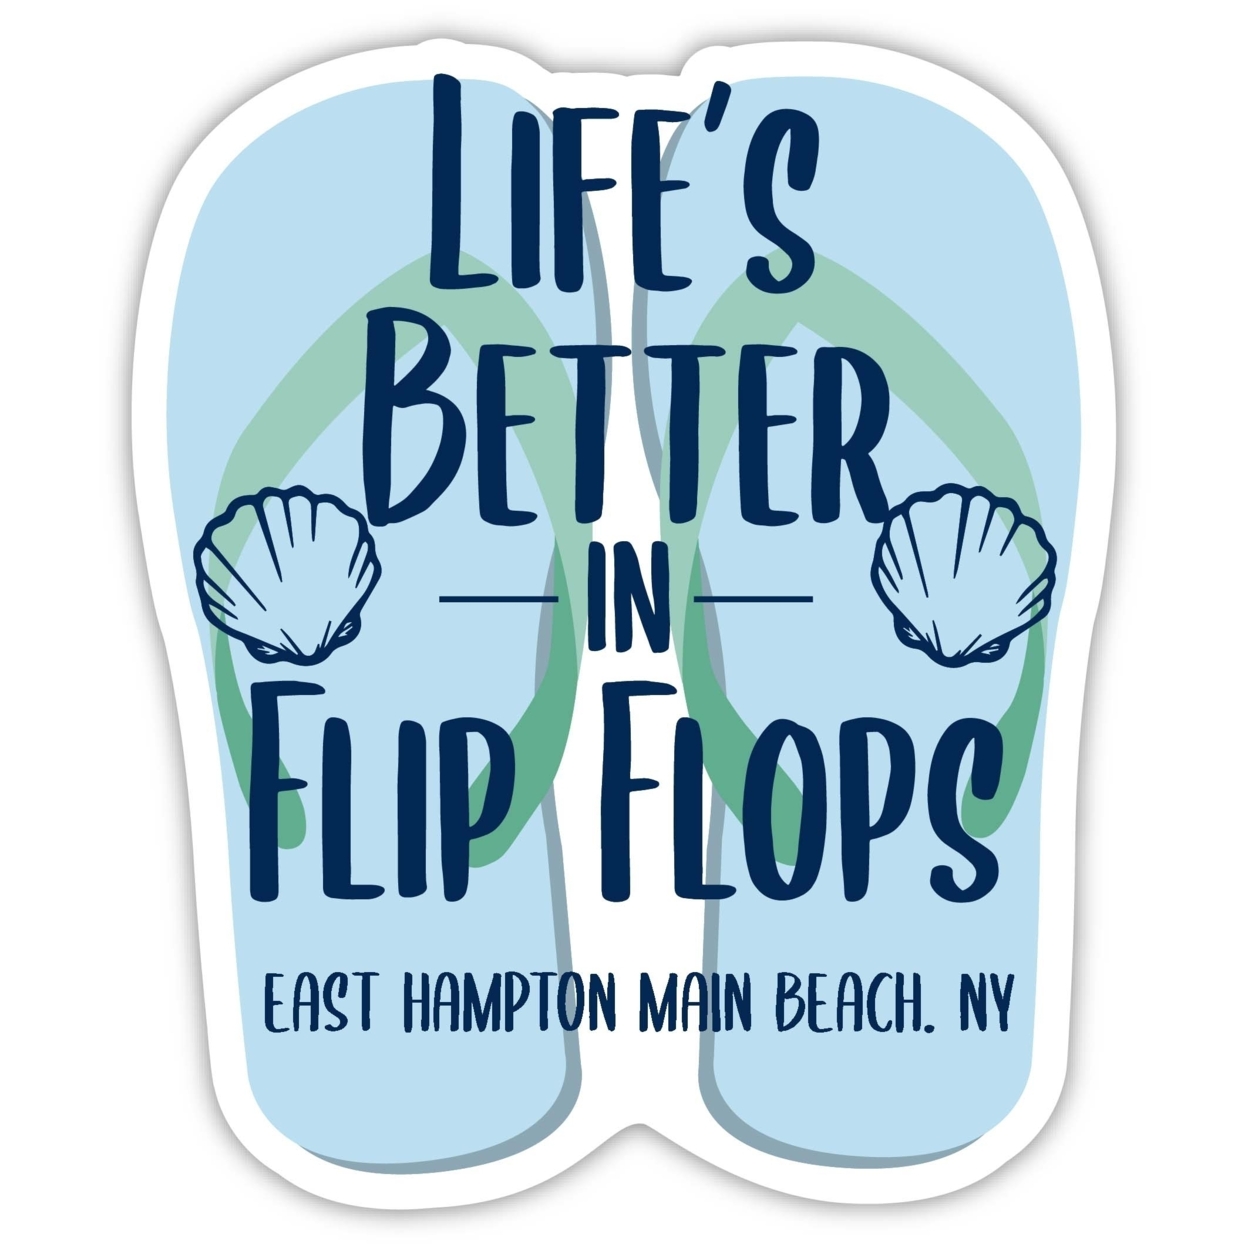 East Hampton Main Beach New York Souvenir 4 Inch Vinyl Decal Sticker Flip Flop Design